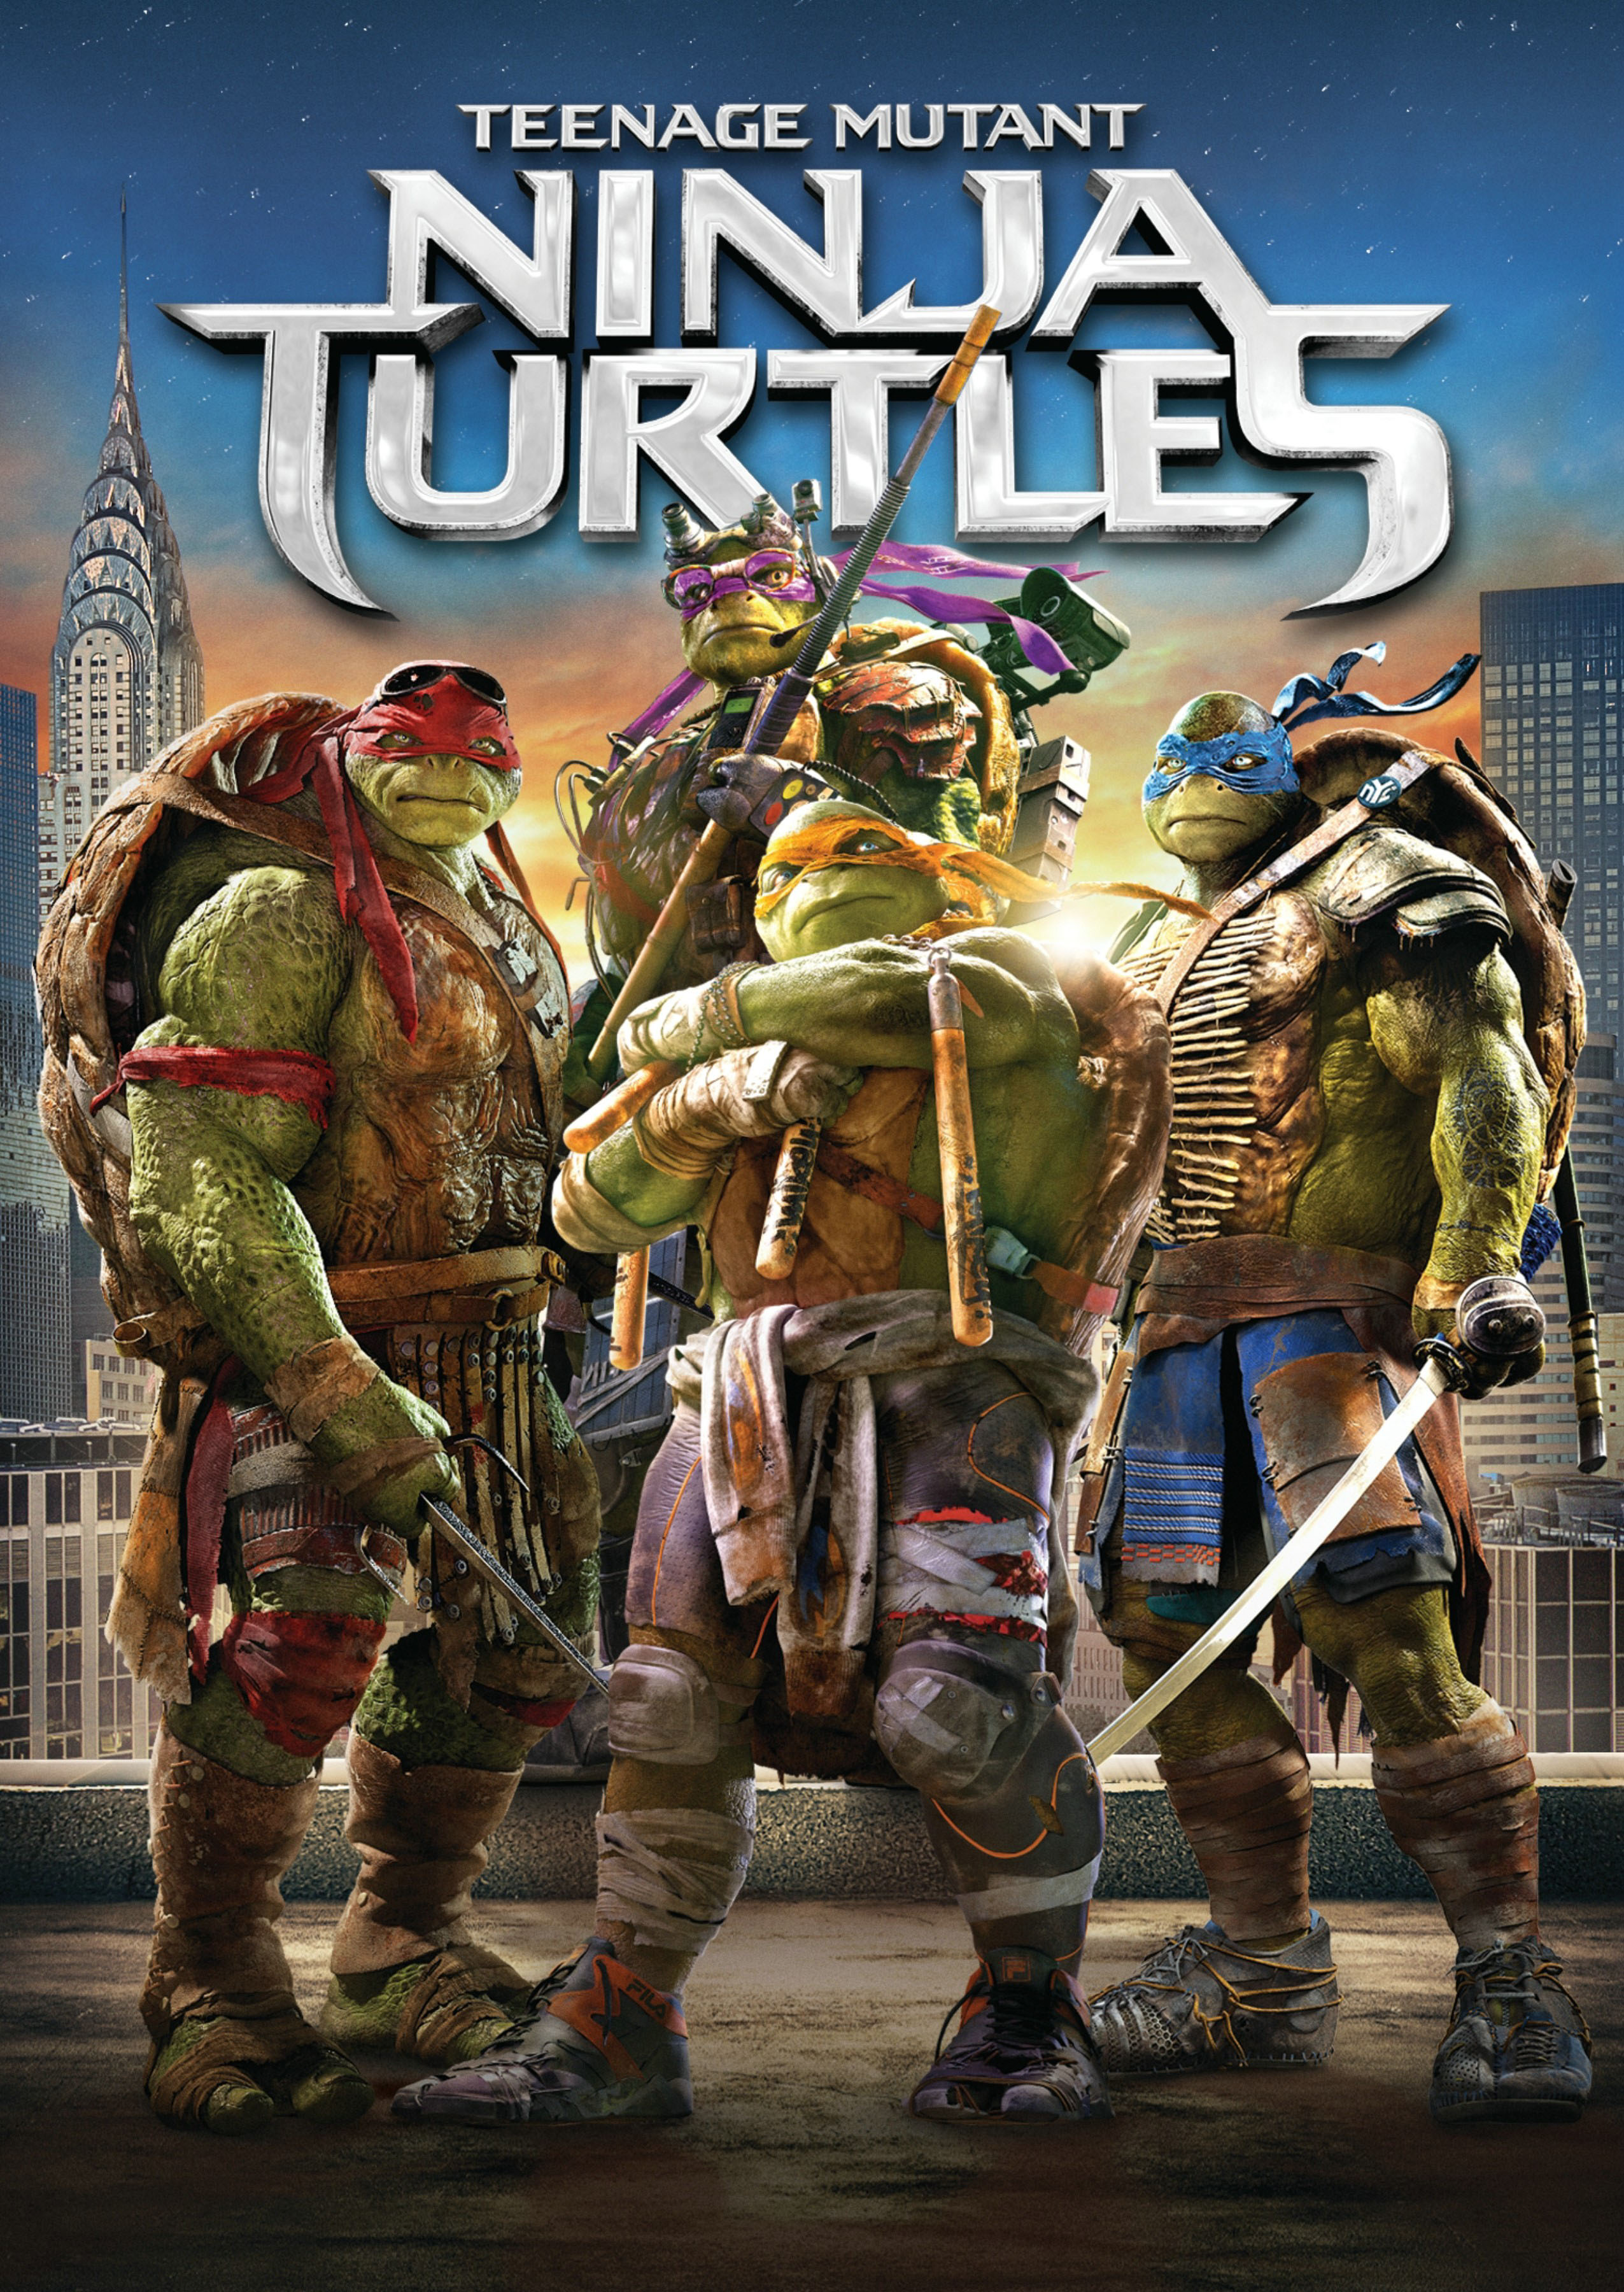 New LiveAction Ninja Turtles Movie Happening Daily Superheroes